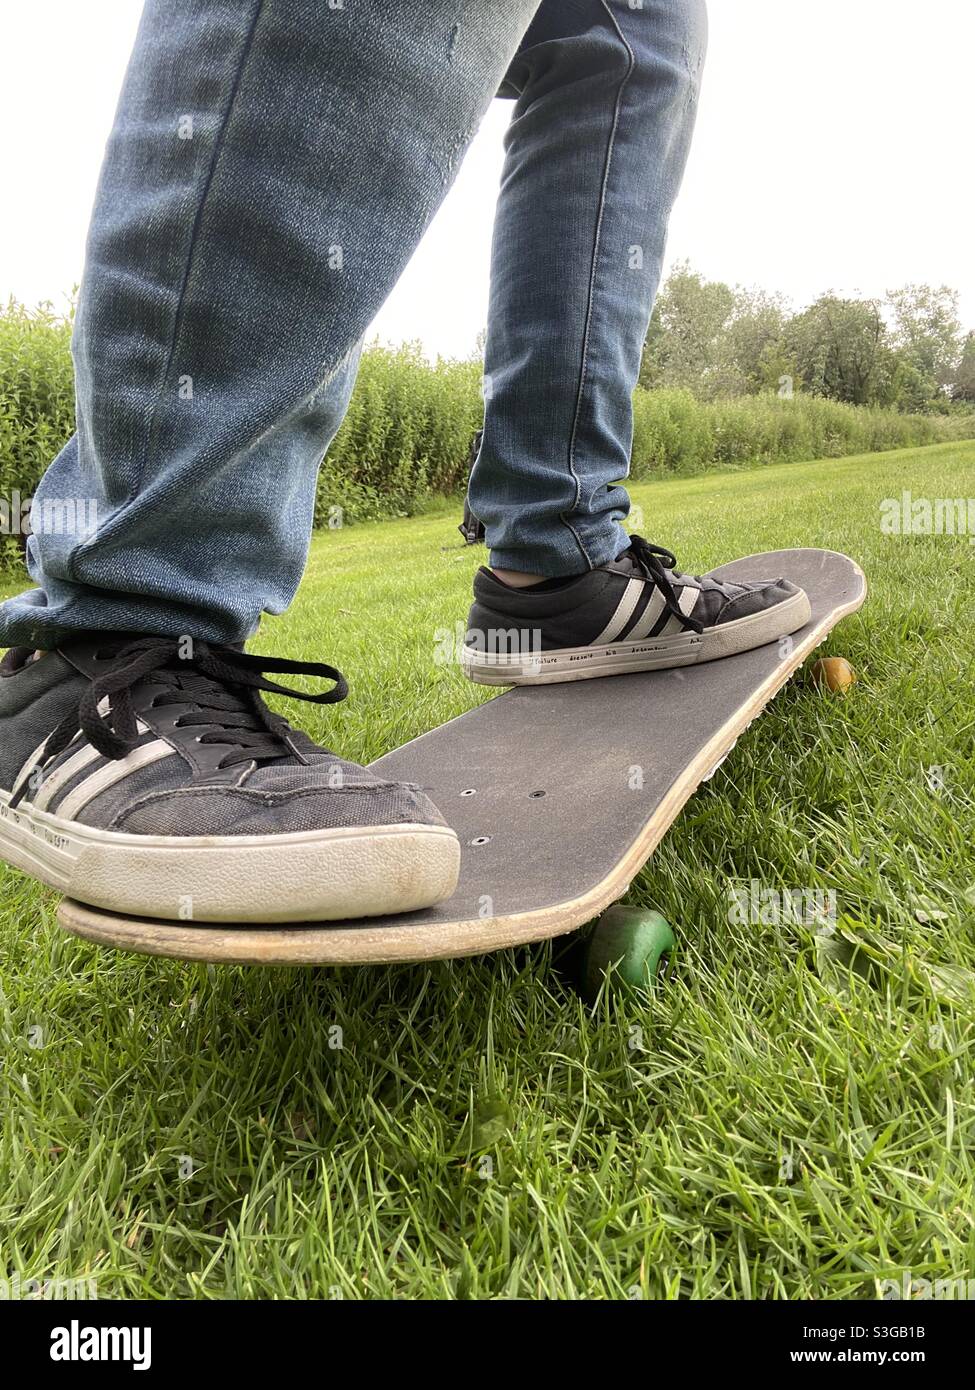 Skateboarding on grass Stock Photo - Alamy